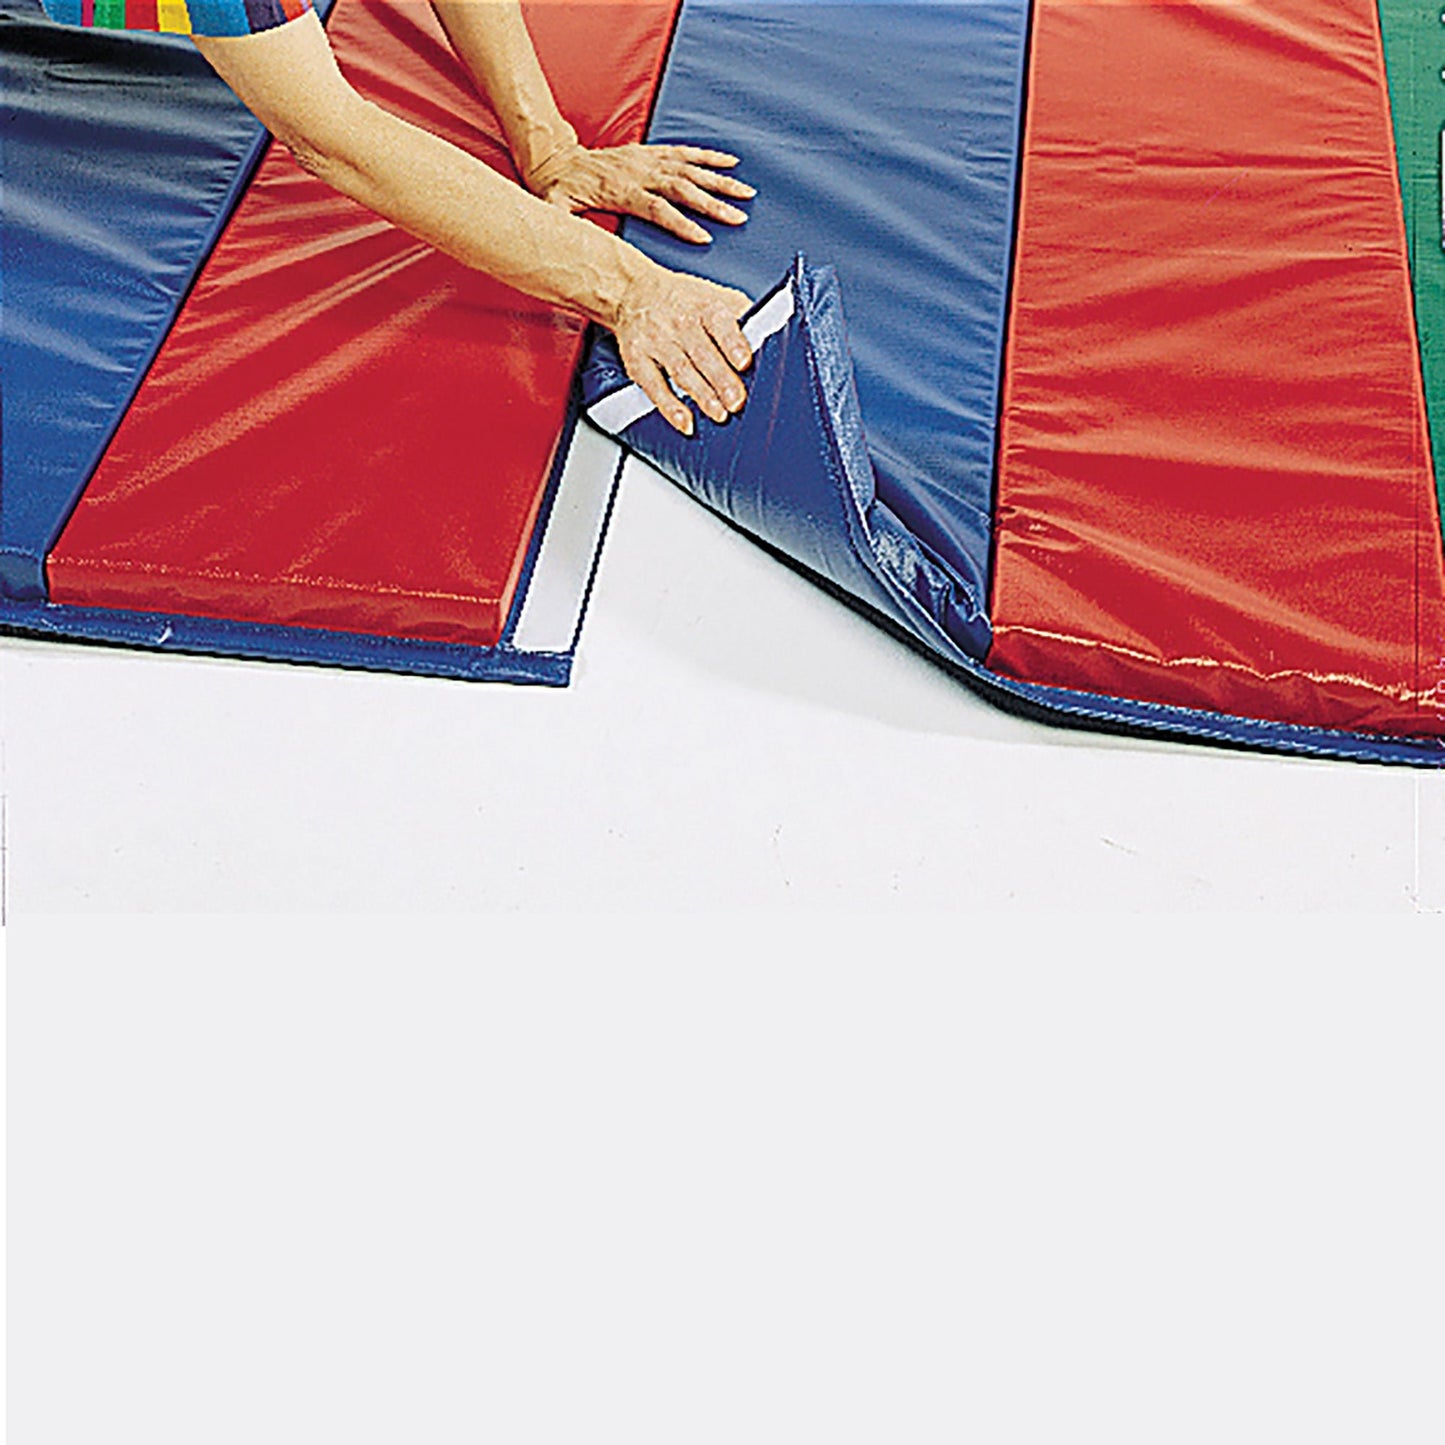 Children's Factory 4' x 6' Folding Gym Mat - Rainbow (CF321-145) - SchoolOutlet